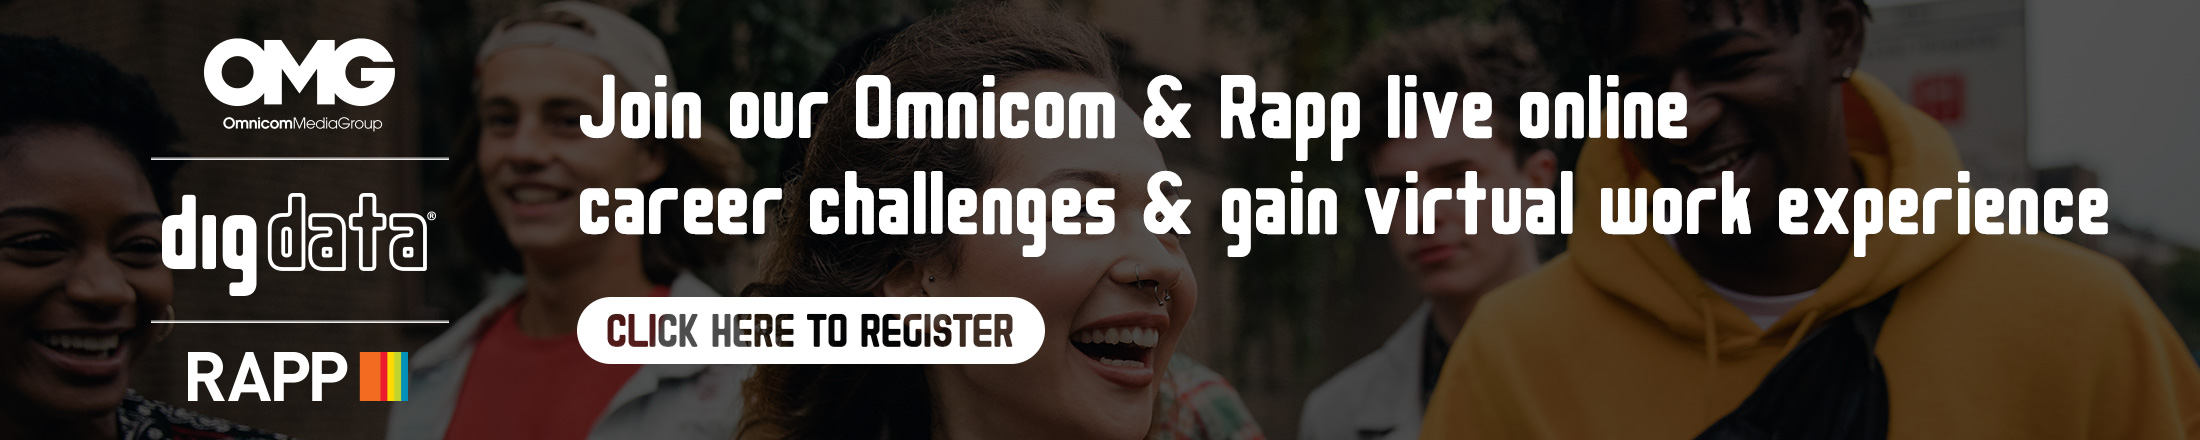 OMG & Rapp Career Challenge Register Banner